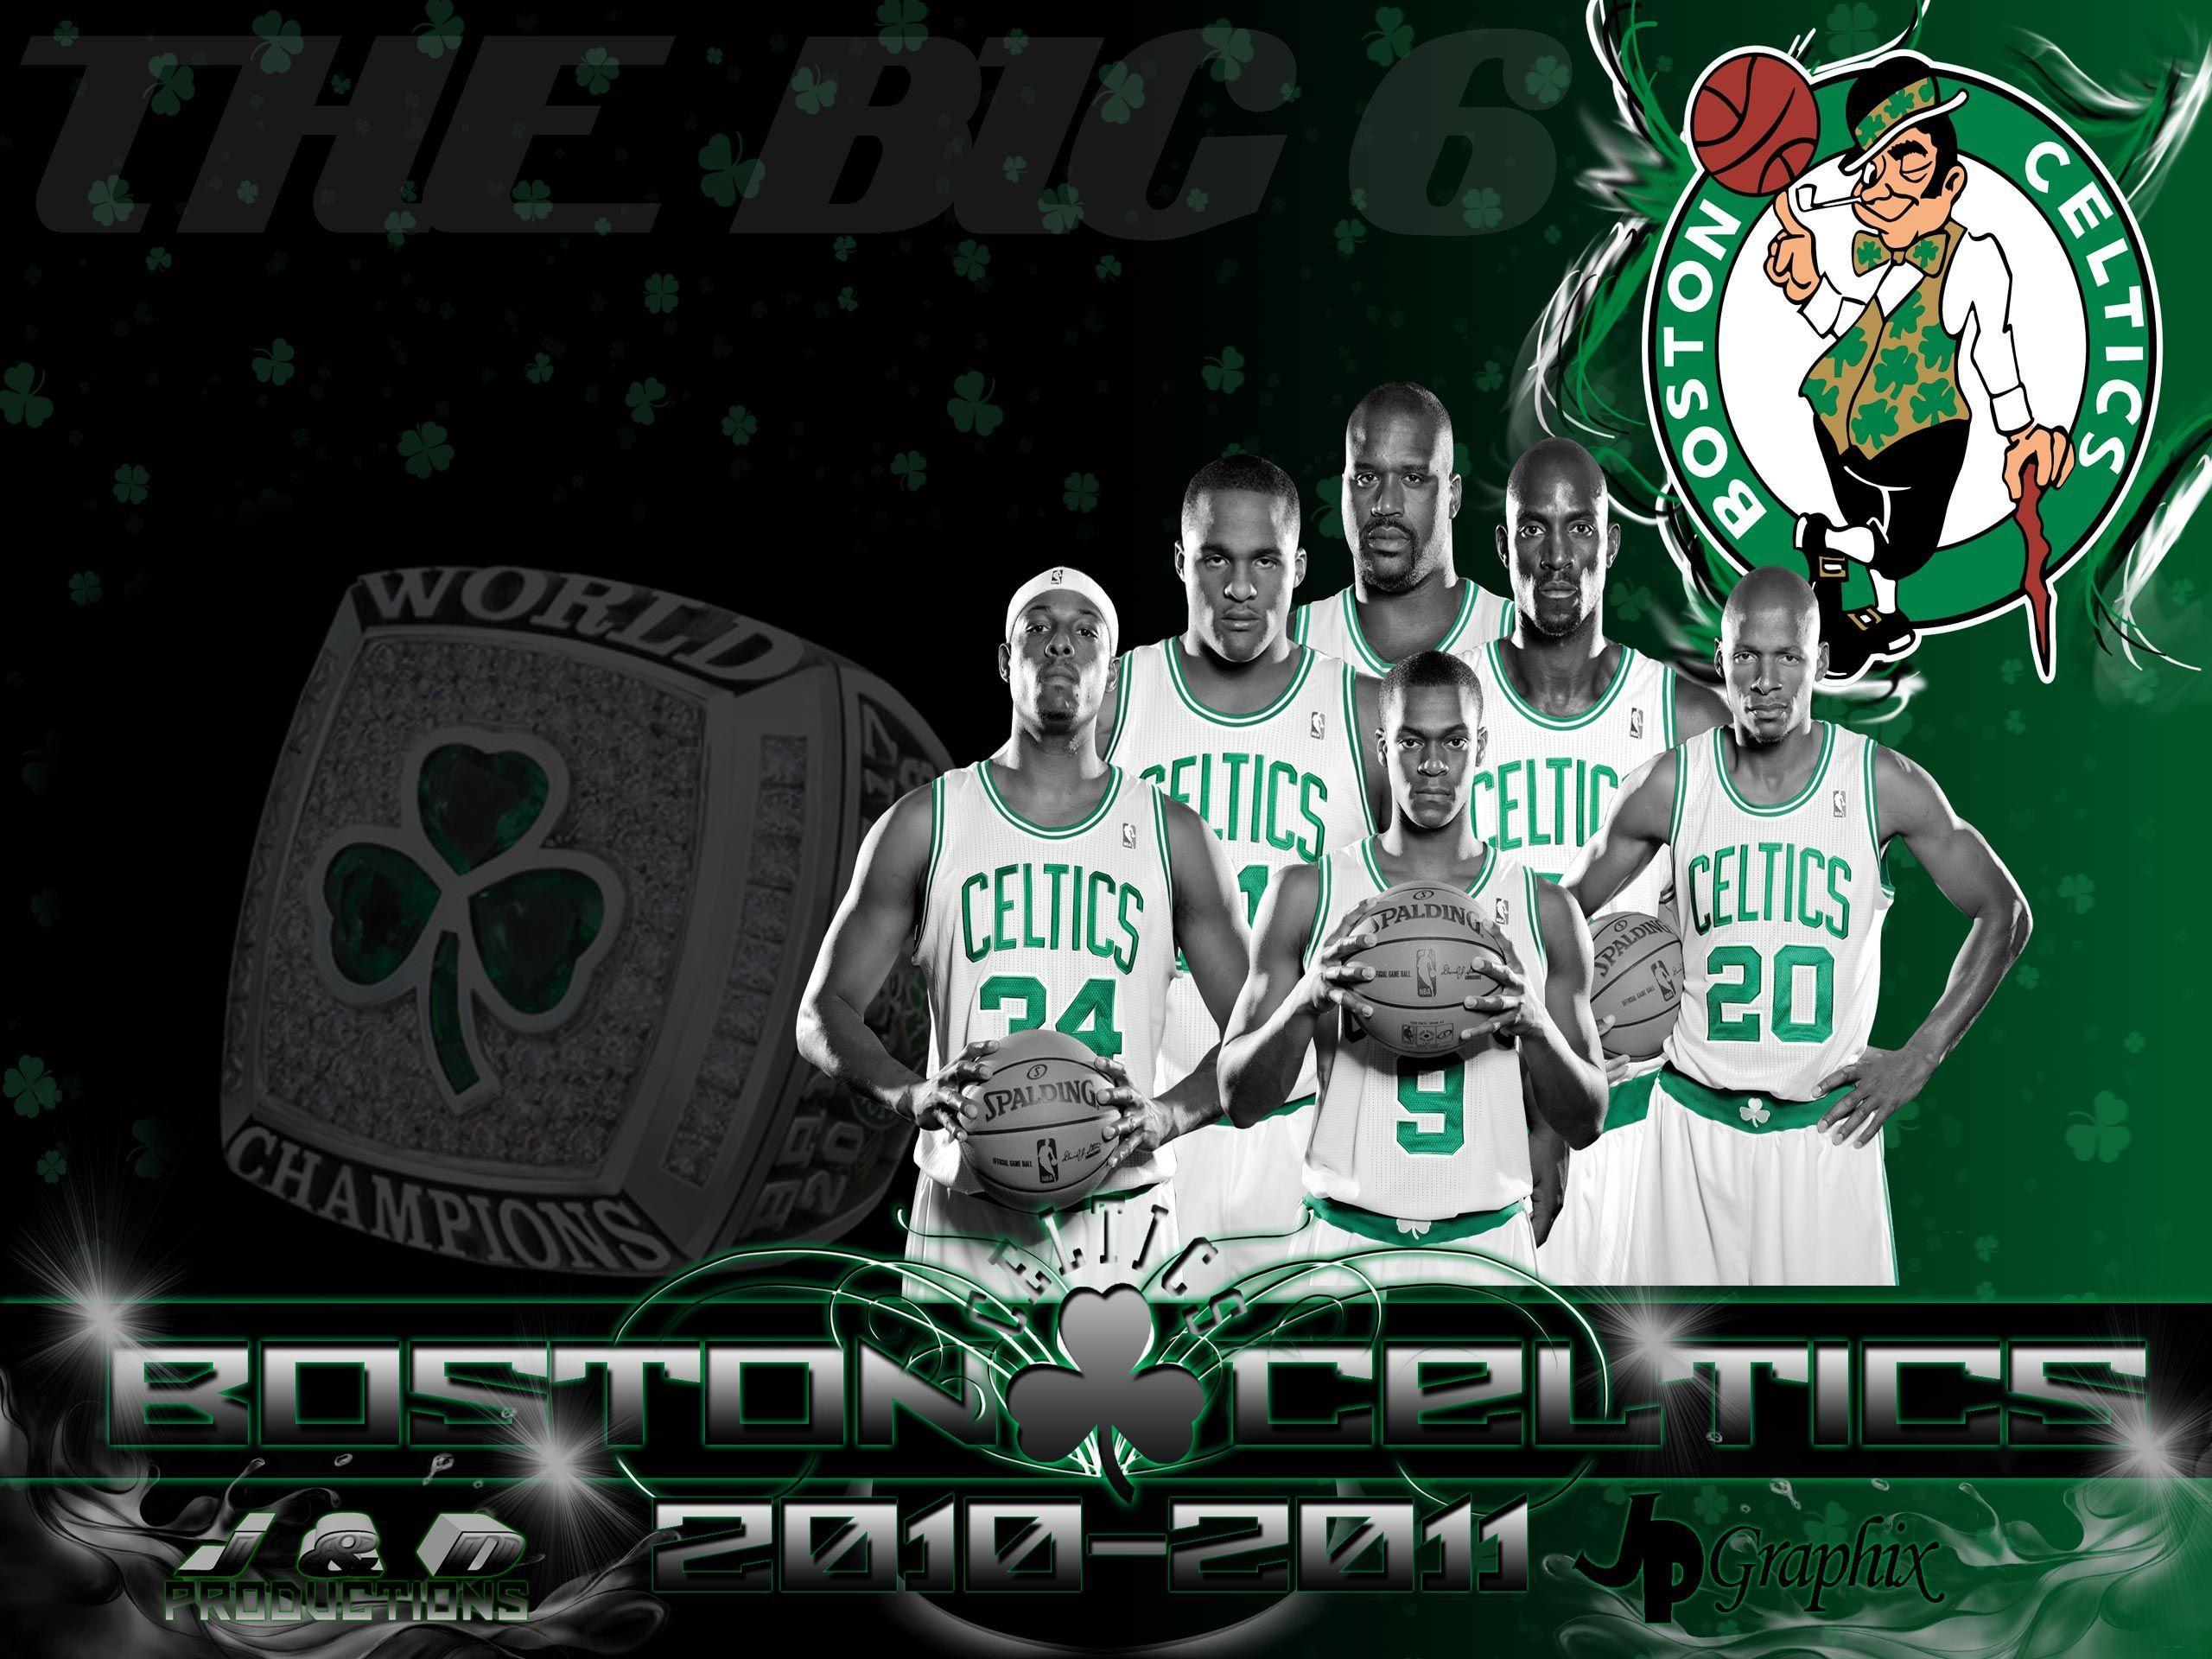 Download wallpapers Boston Celtics American basketball club NBA USA  green stone background basketball Jayson Tatum Kemba Walker Jaylen  Brown for desktop free Pictures for desktop free